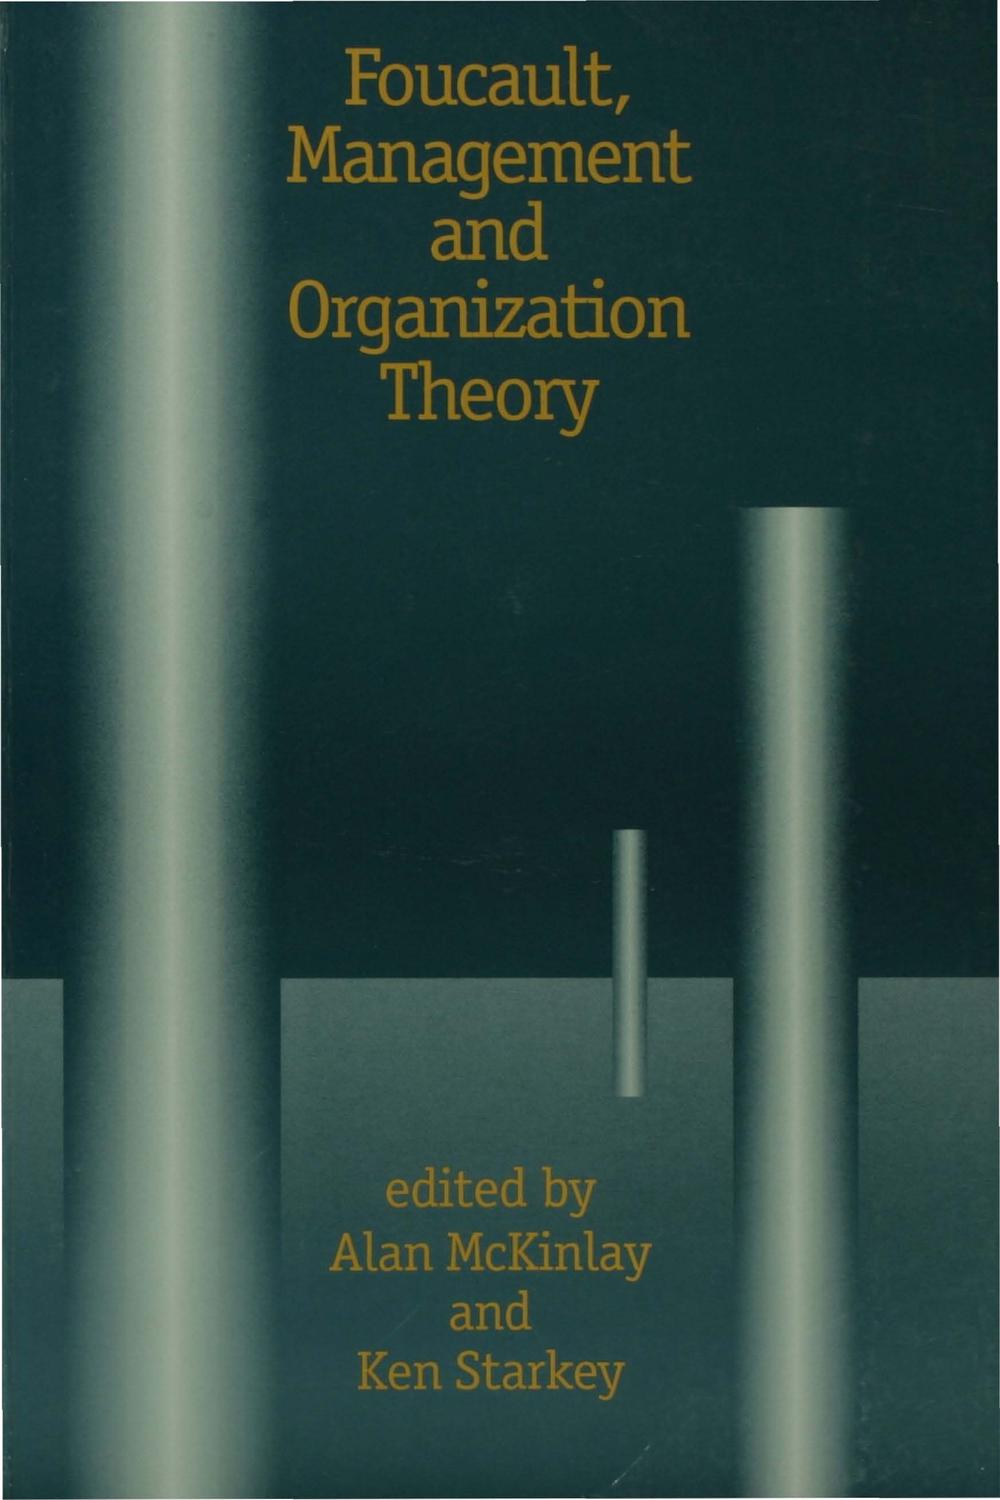 Foucault, Management and Organization Theory - Alan McKinlay, Ken Starkey